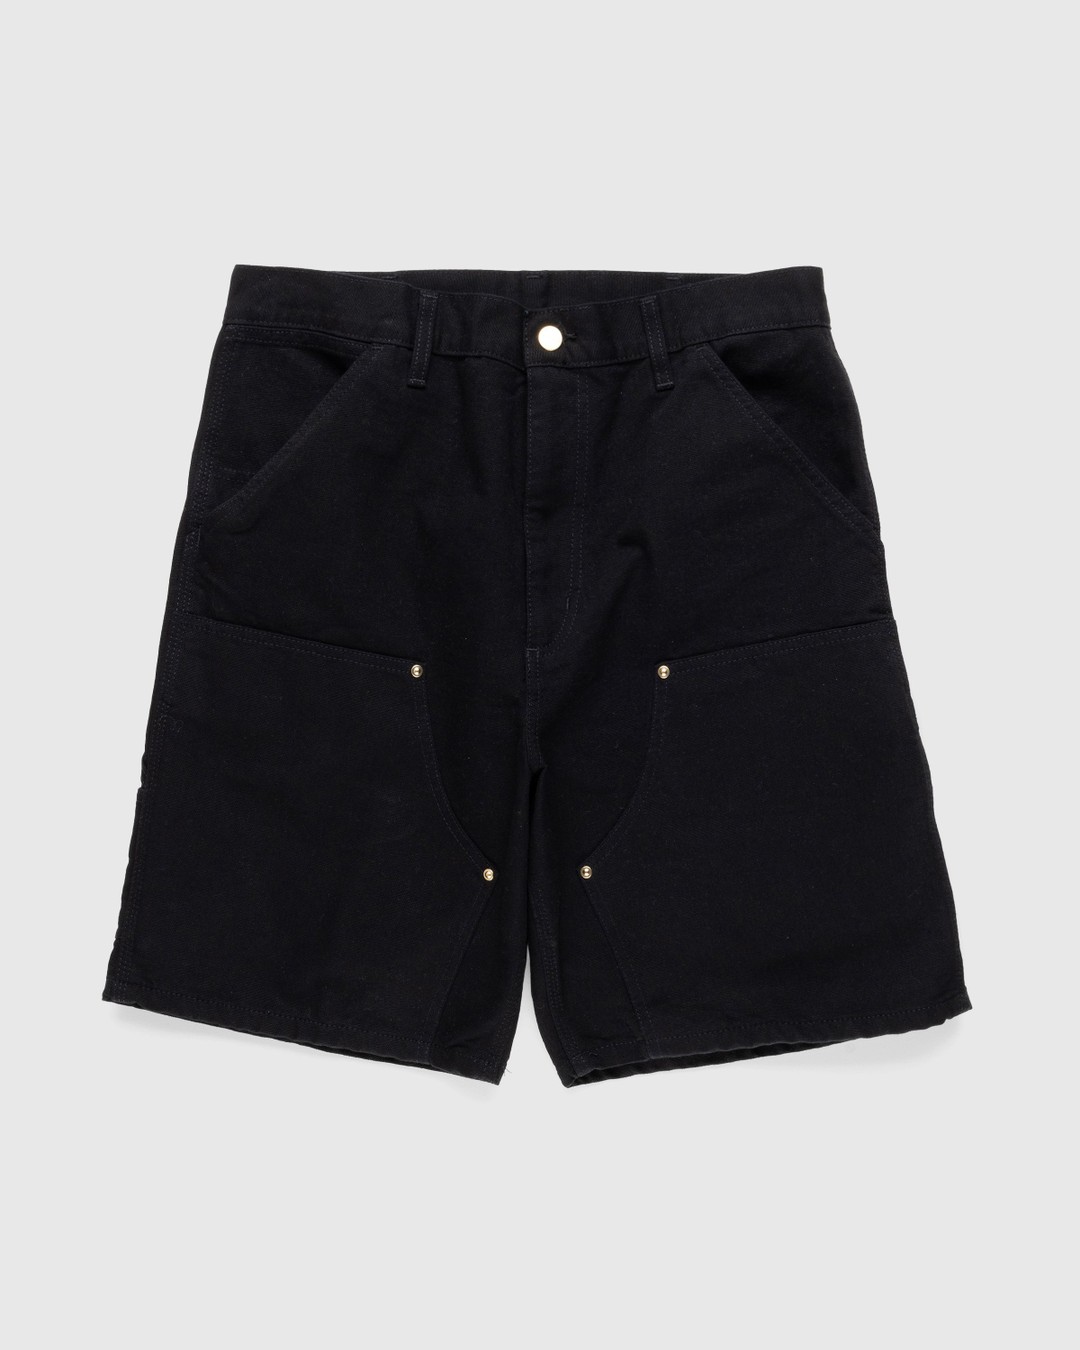 Carhartt WIP – Double Knee Short Rinsed Black - Shorts - Black - Image 1